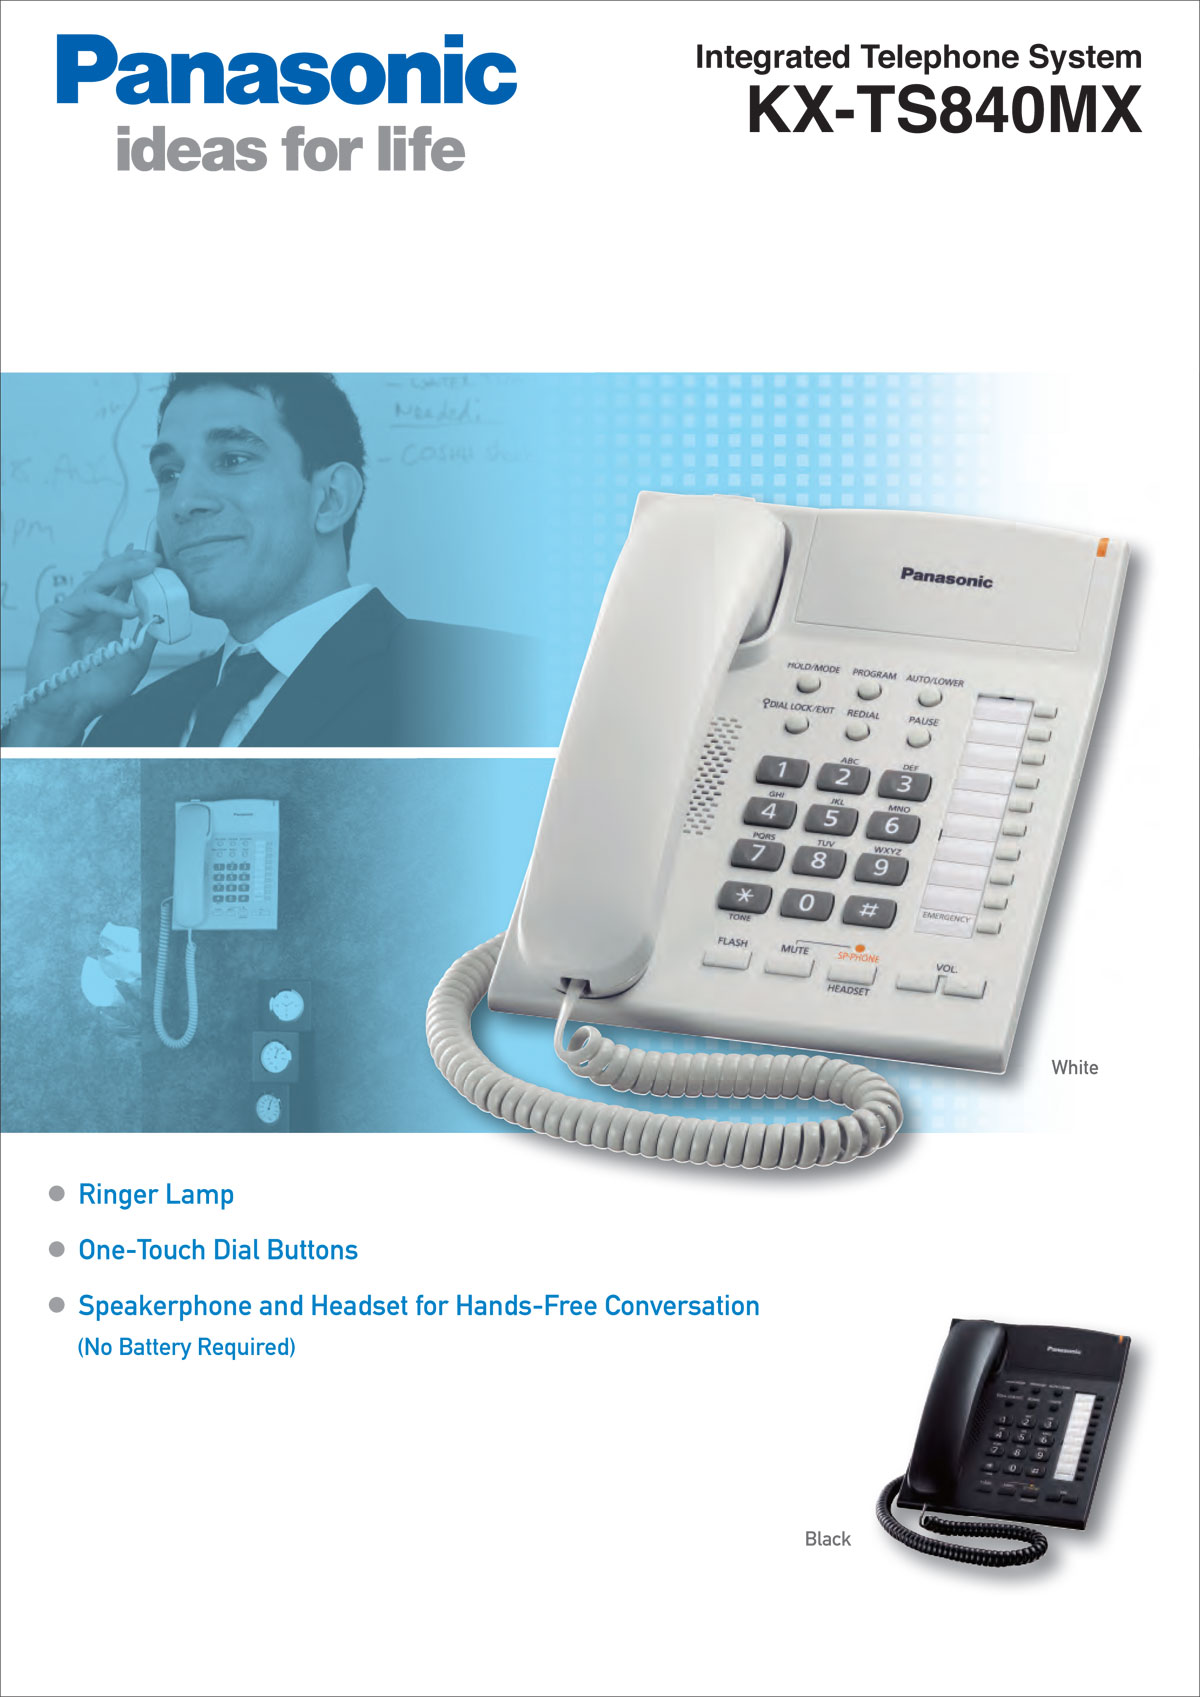 KX-TS840MX,โทรศัพท์สายเดียว,Singleline,Telephone,โทรศัพท์ตั้งโต๊ะ,ใช้กับ,ตู้สาขาโทรศัพท์,Panasonic